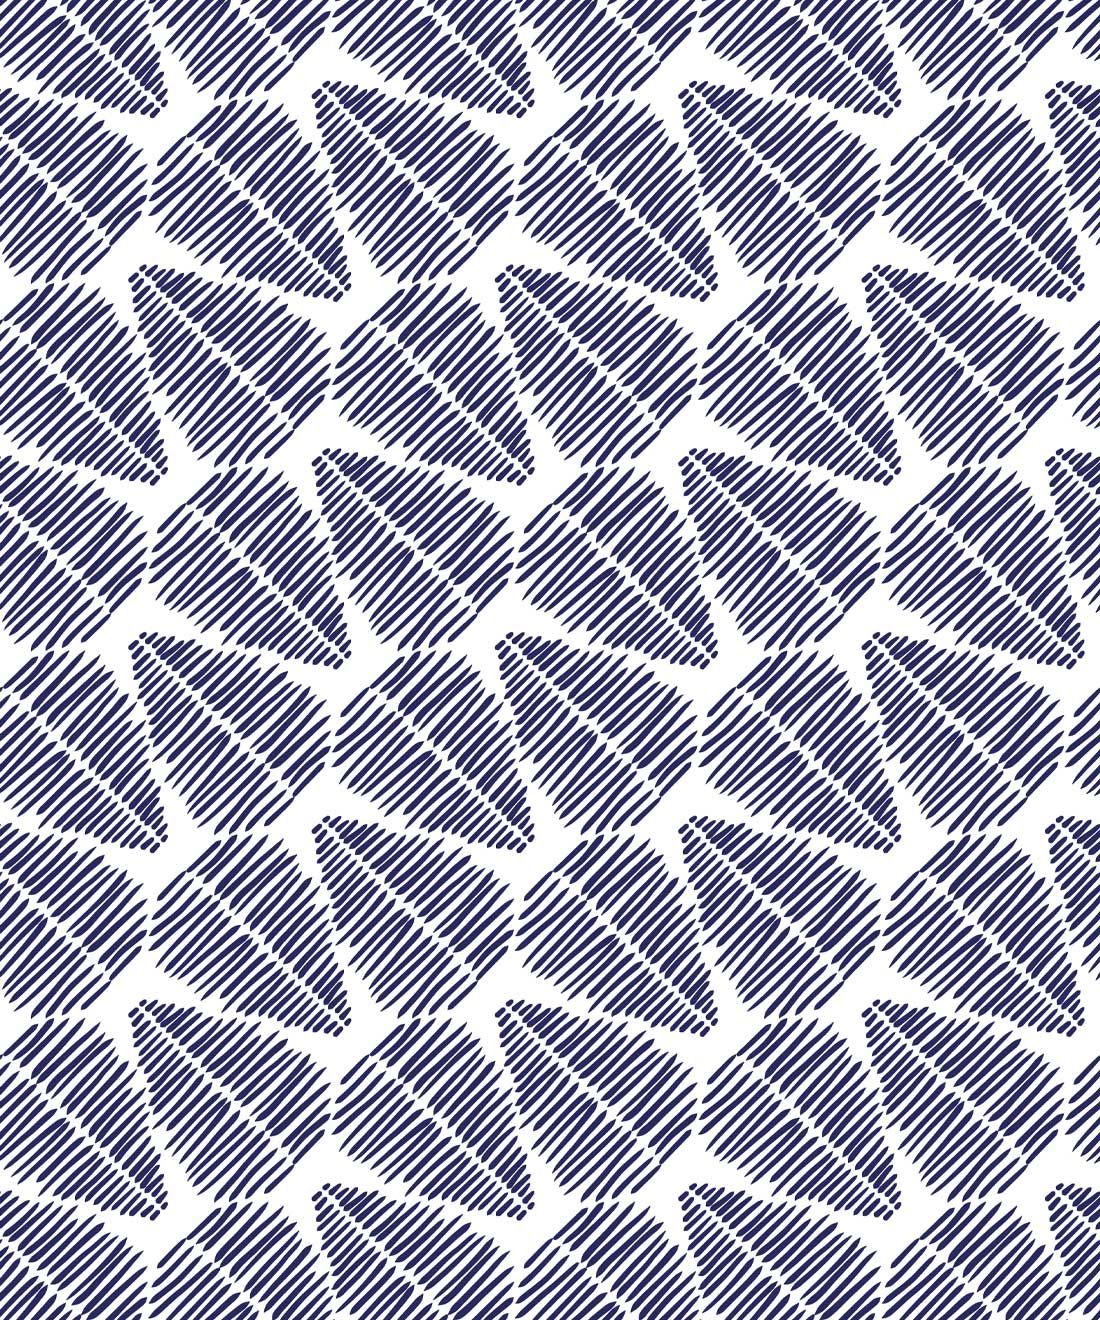 Serenity Swivel Wallpaper • geometric • Navy • Swatch